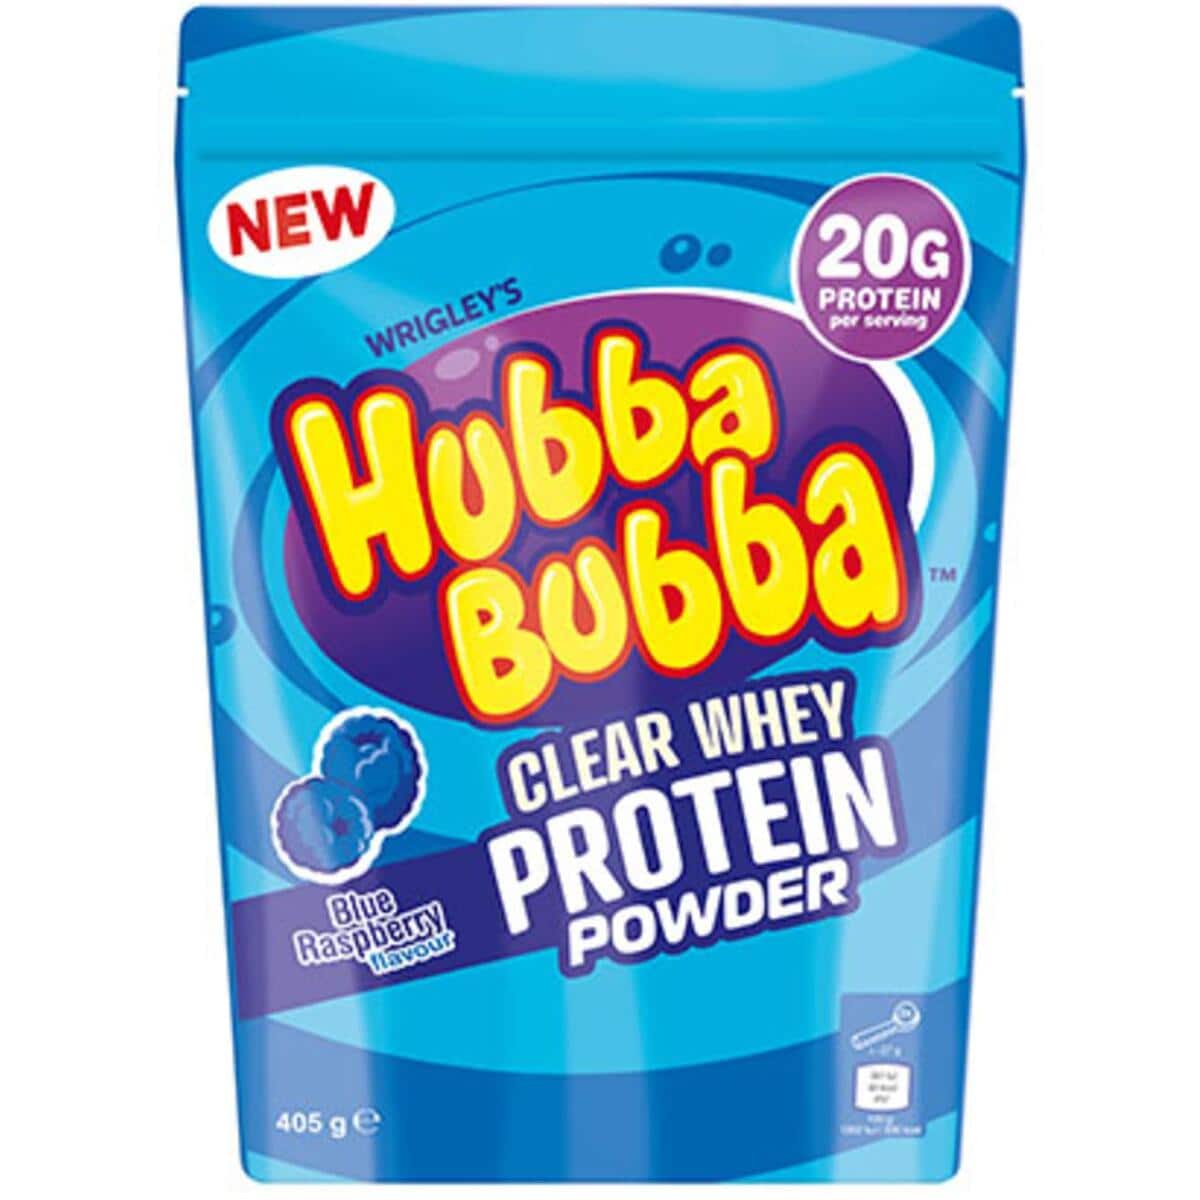 Wrigleys Hubba Bubba Clear Whey Protein Powder, 405 g Beutel bei